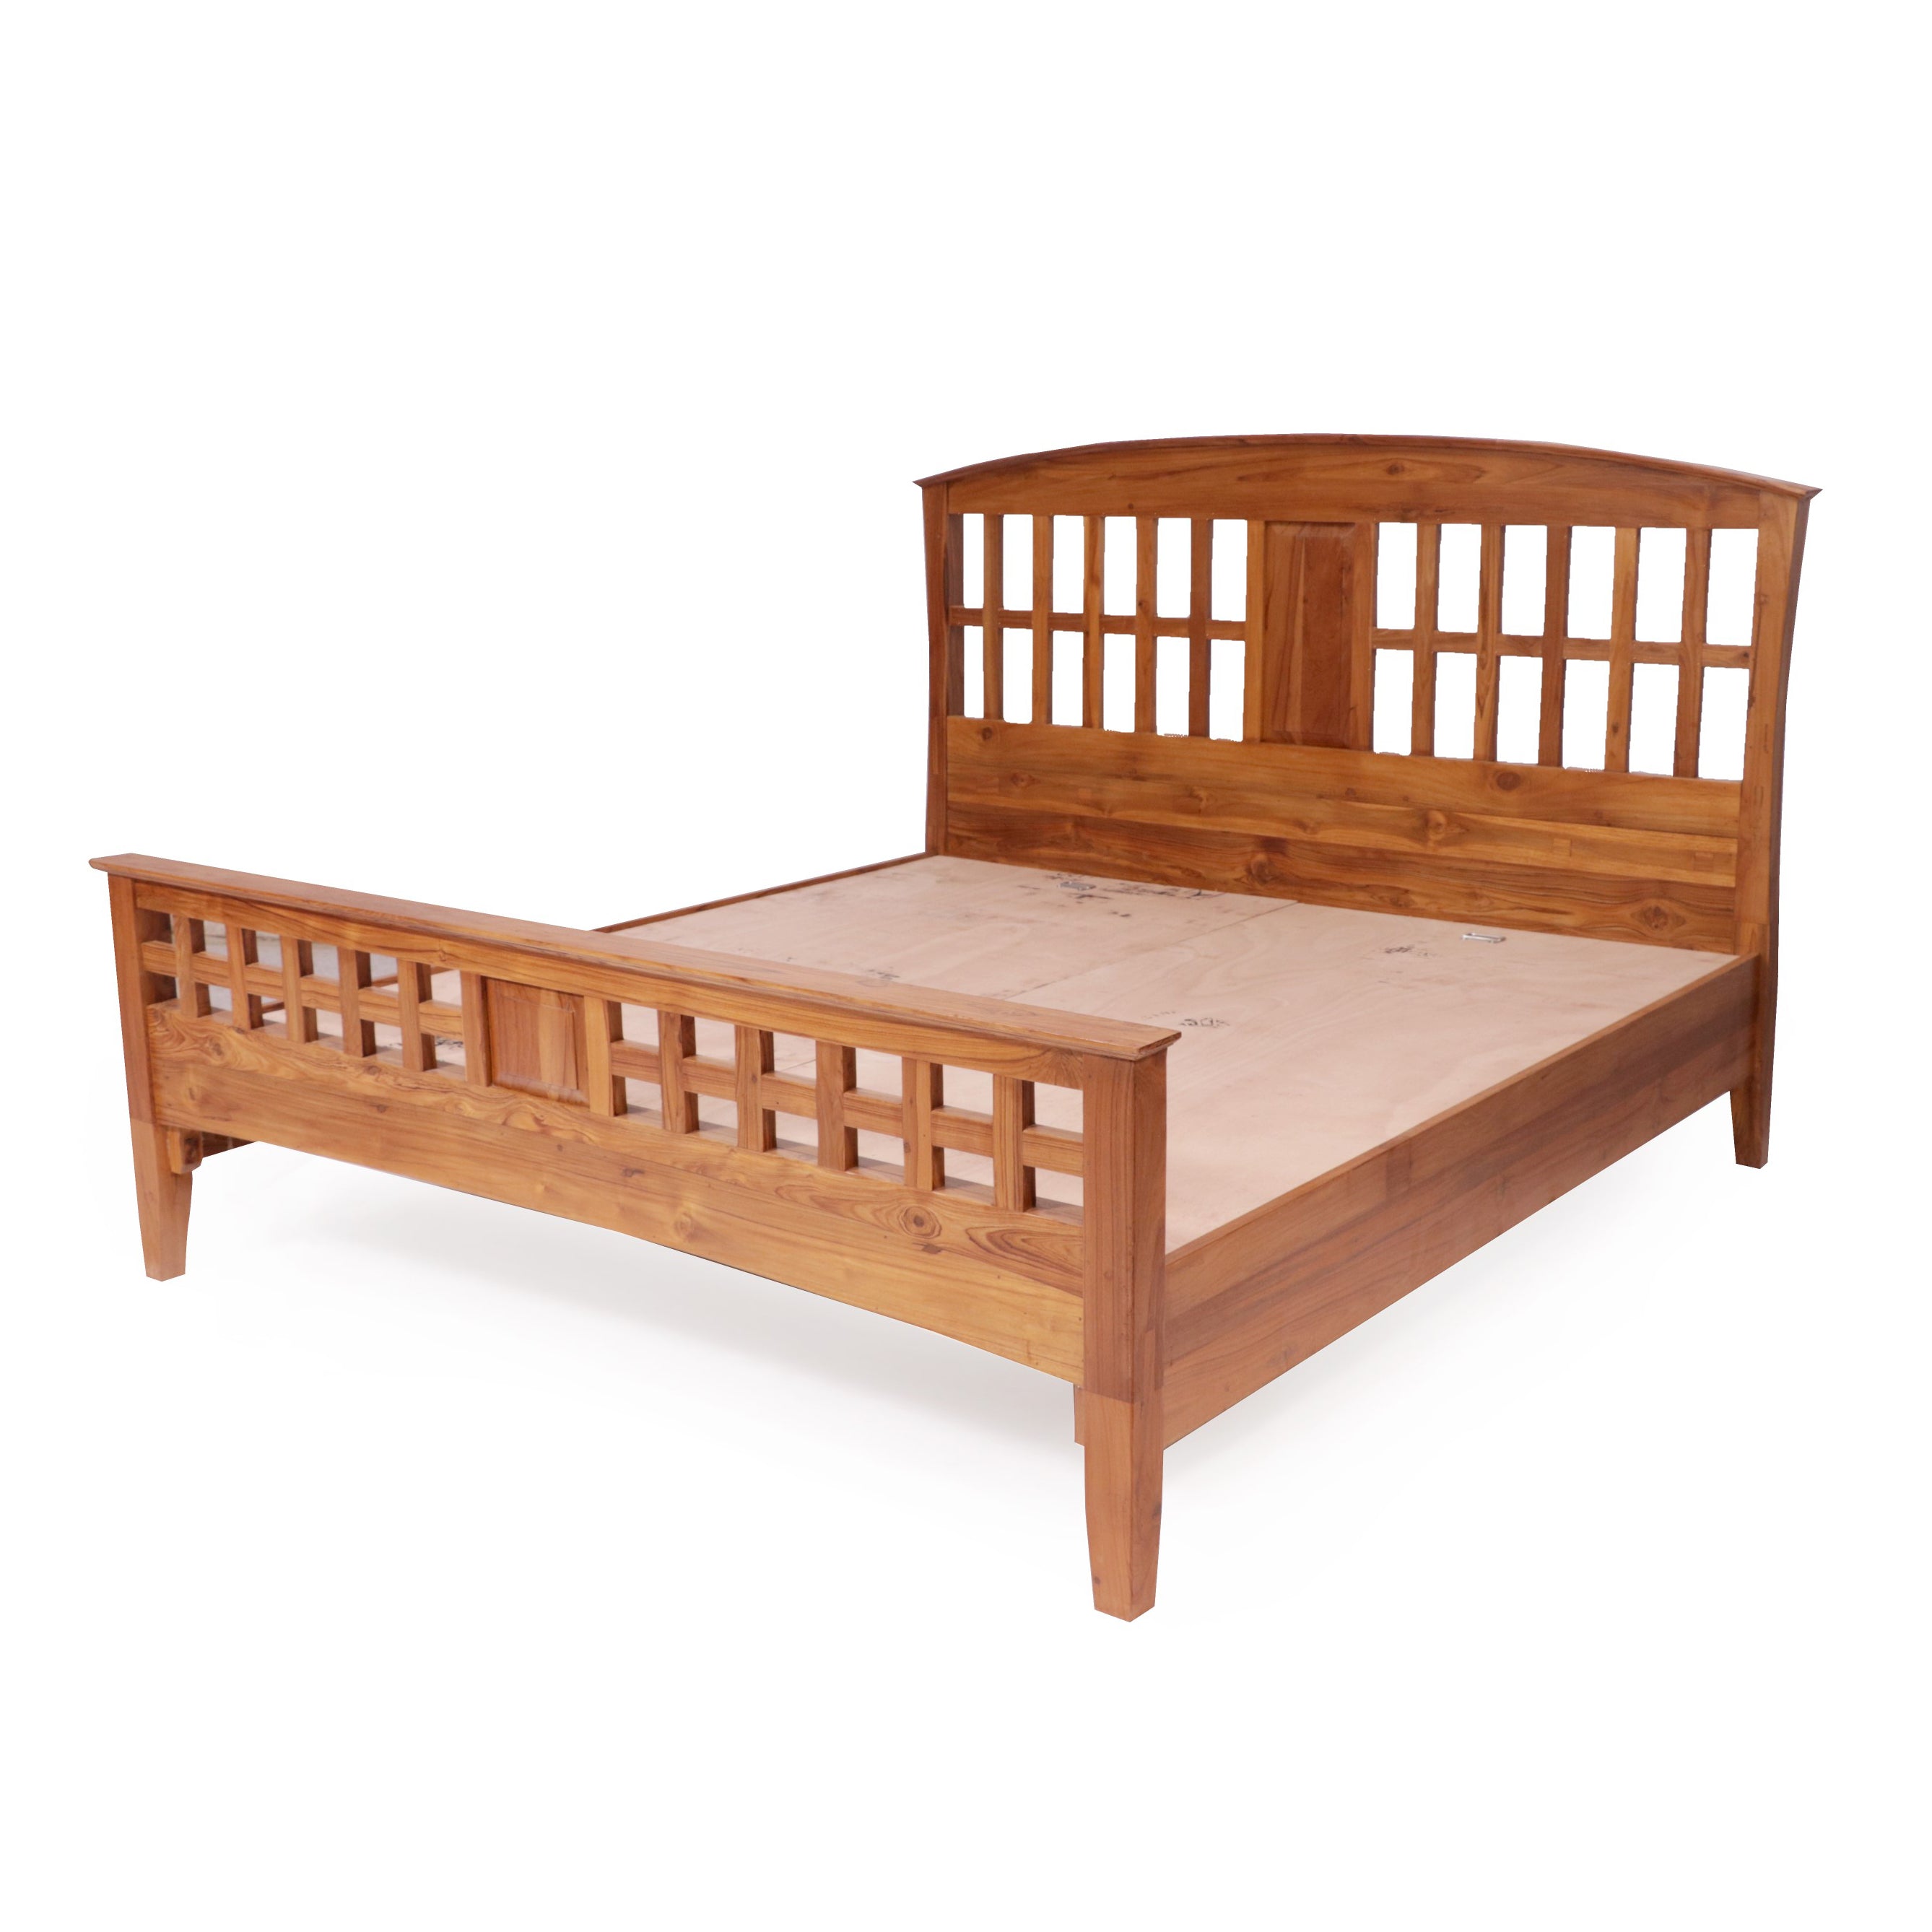 Rectangular Design Bed in Natural Light Brown Finish Bed